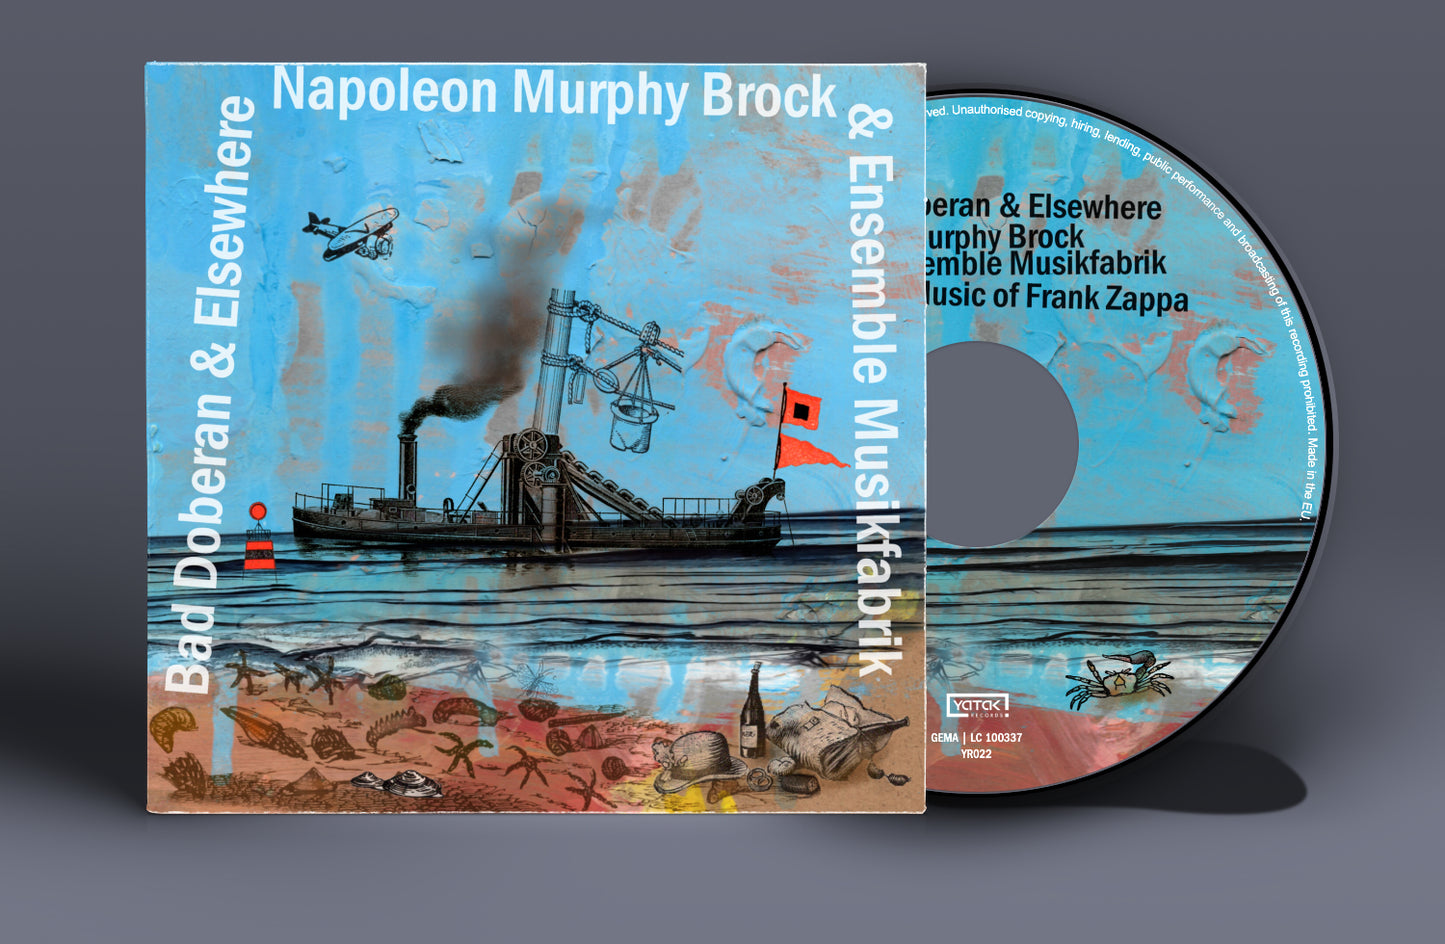 Napoleon Murphy Brock & Ensemble Musikfabrik: Bad Doberan & Elsewhere (CD)